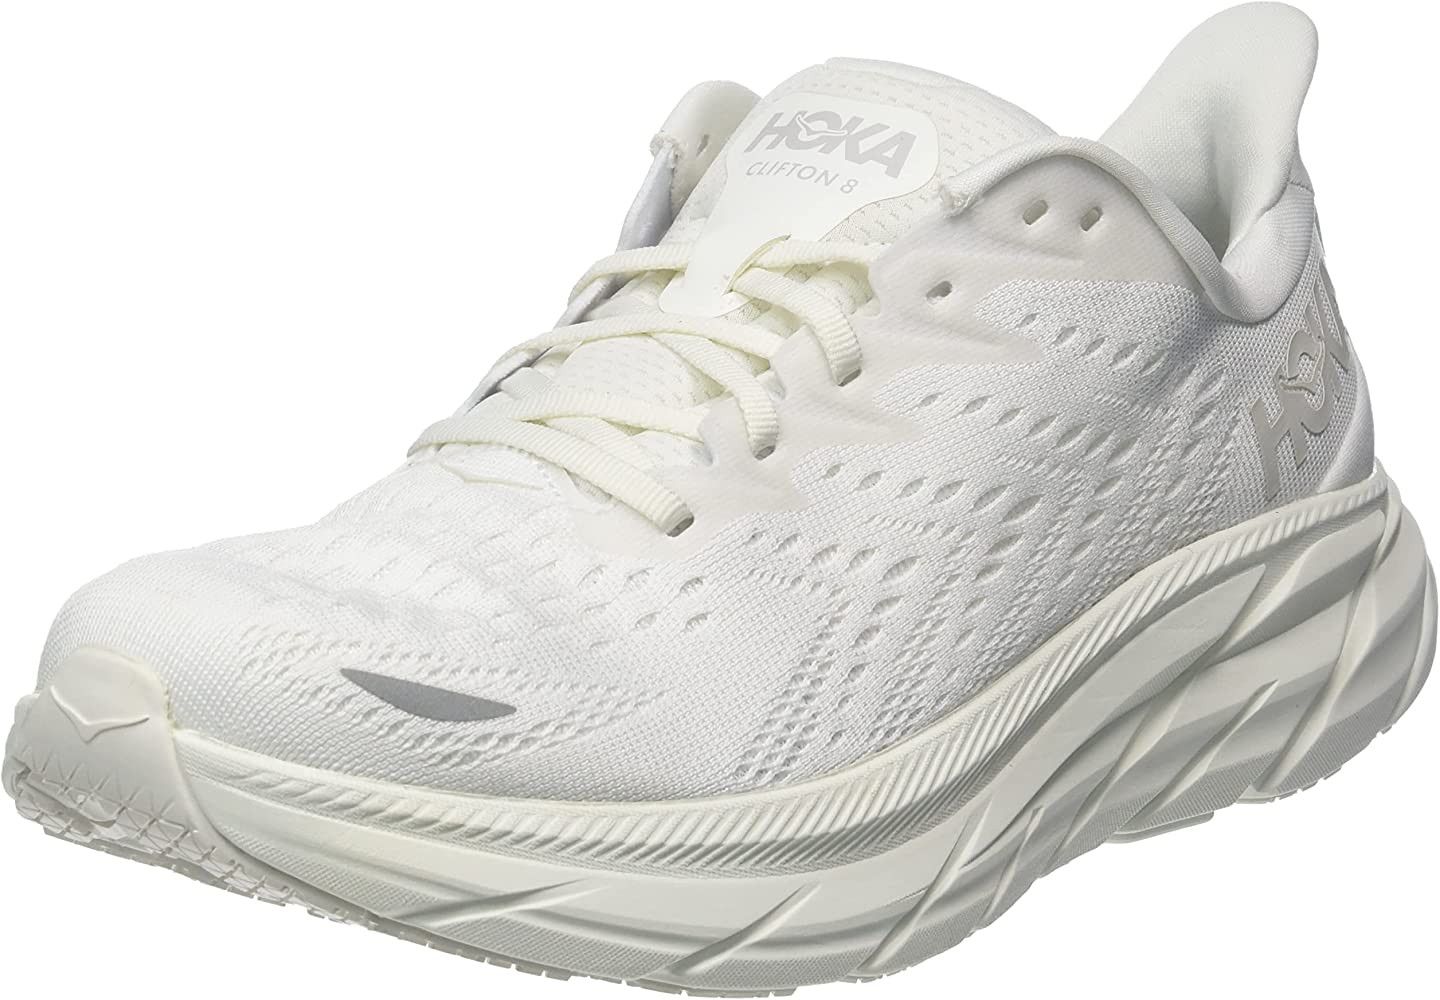 Brand: HOKA ONE ONE 4.5  340
HOKA ONE ONE womens Running Shoes
752







      
Color: White/White  | Amazon (US)